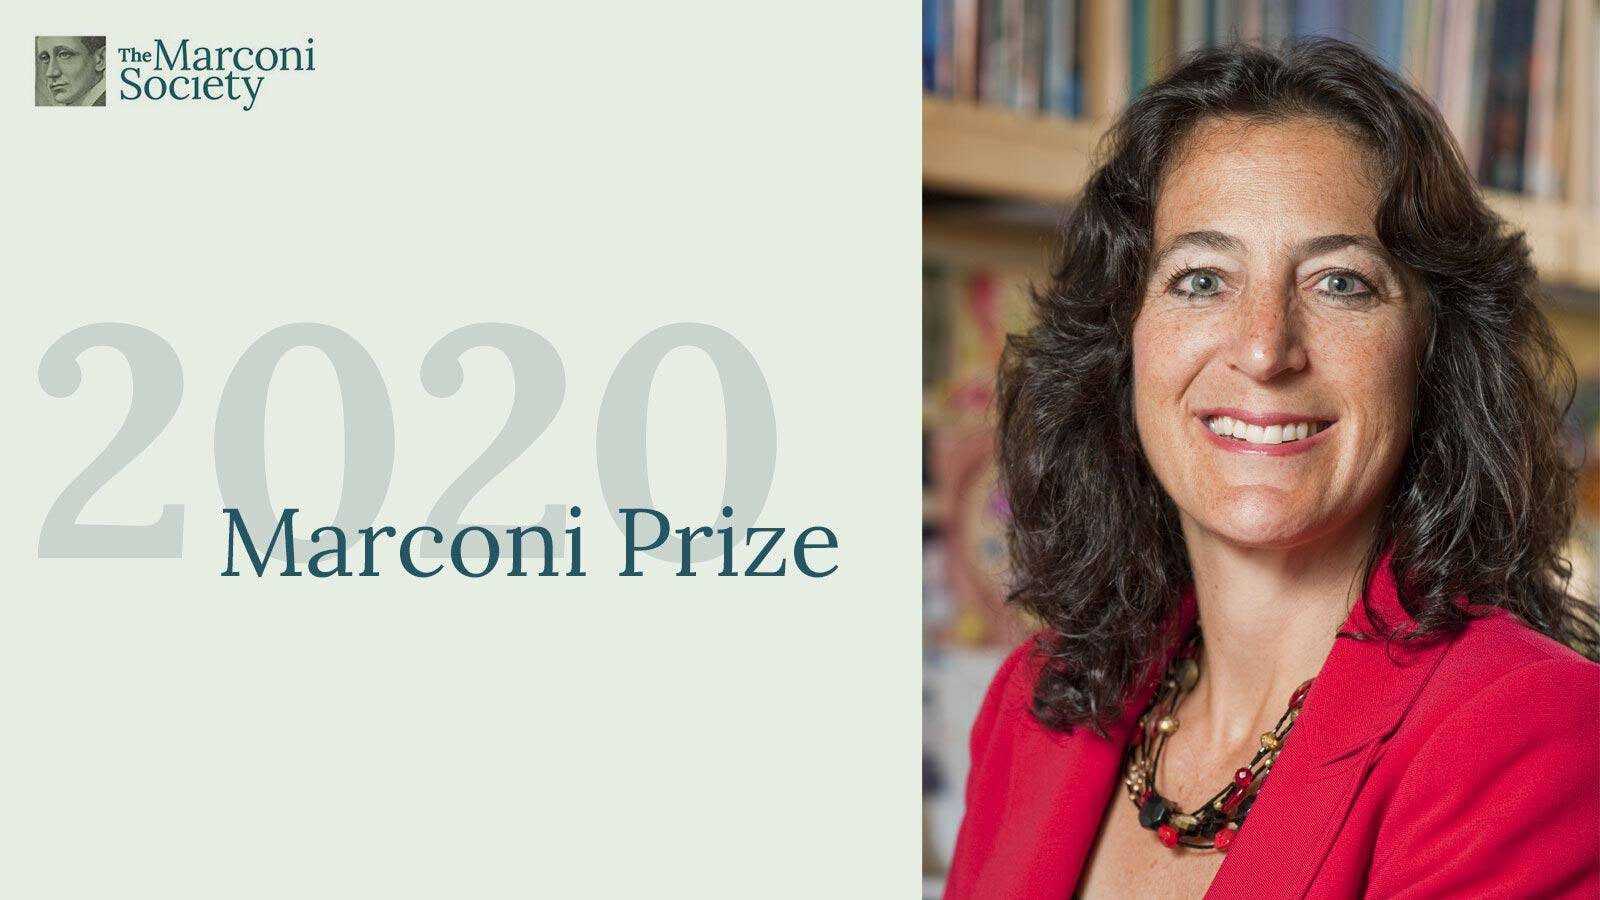 Andrea Goldsmith, winner of the 2020 Marconi Prize